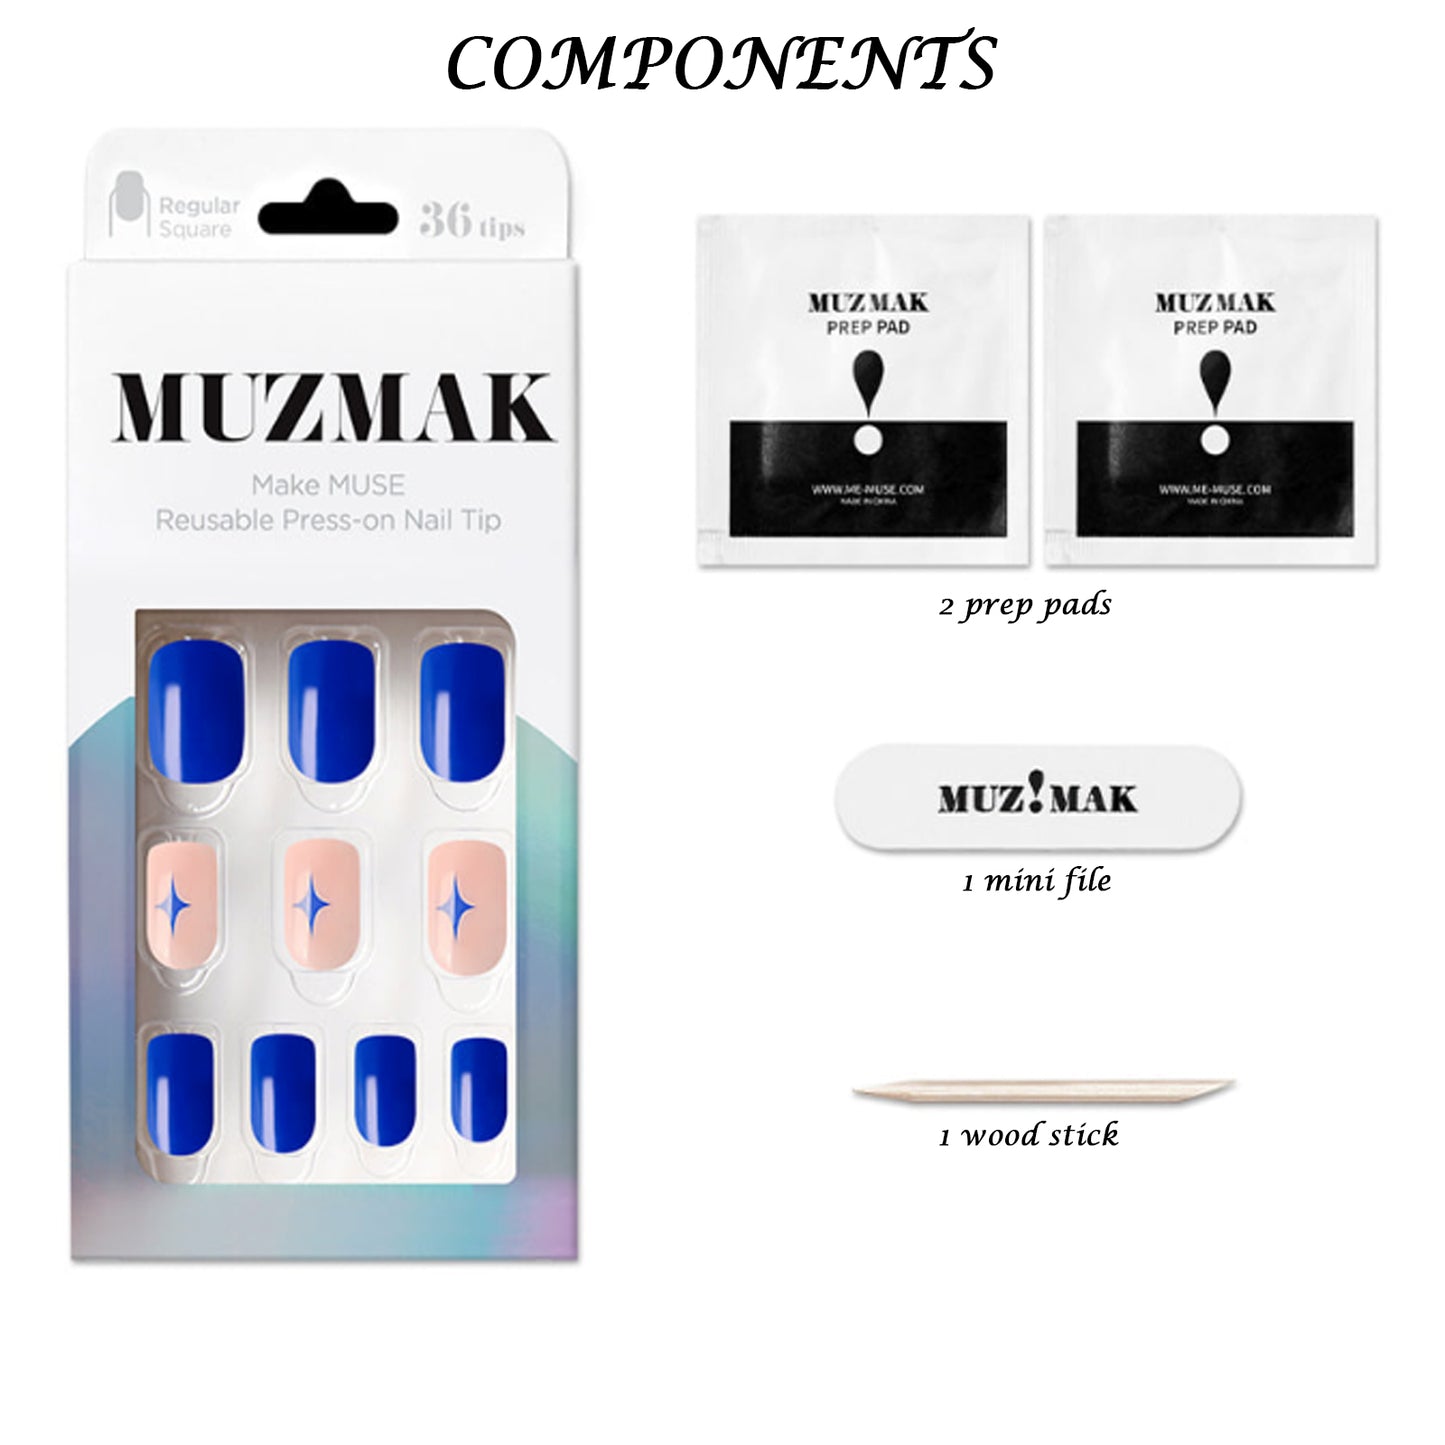 Muzmak ((Regular Square) N Twinkle Twinkle Nail) 36pcs Nail Art Pattern Sticker Set Semicure Nail